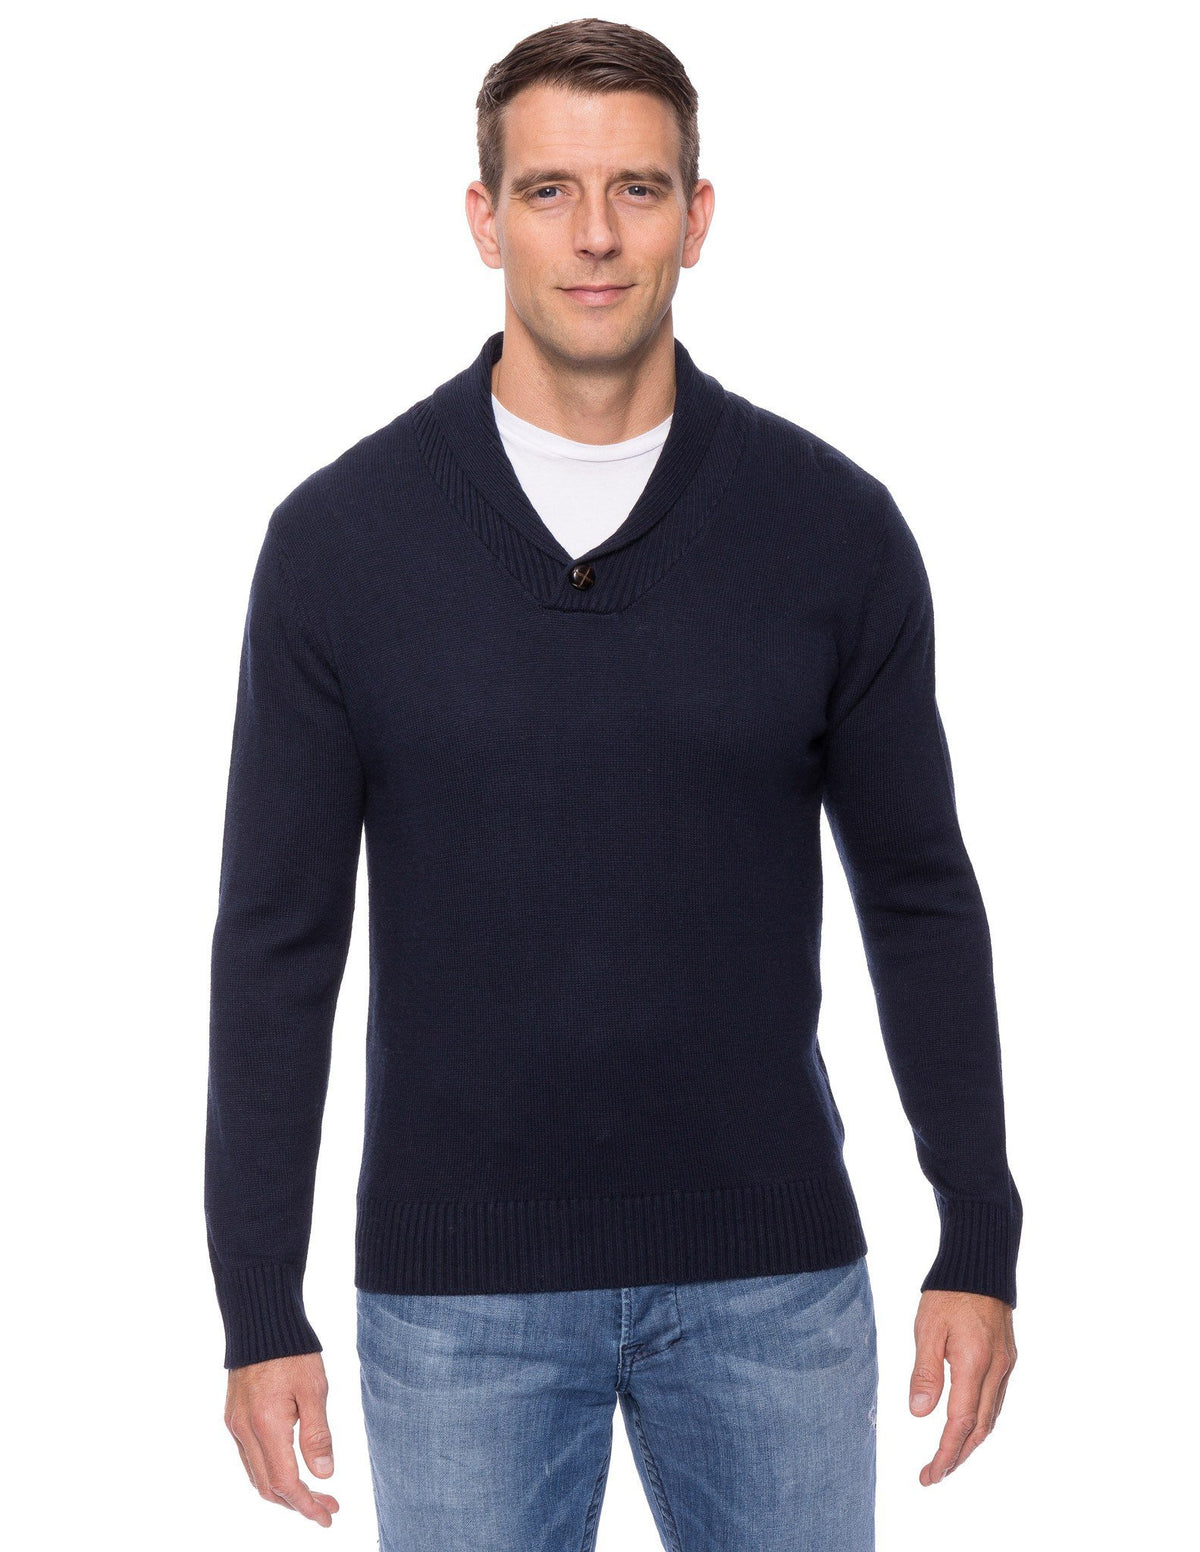 Men's Cashmere Blend Shawl Collar Pullover Sweater - Navy